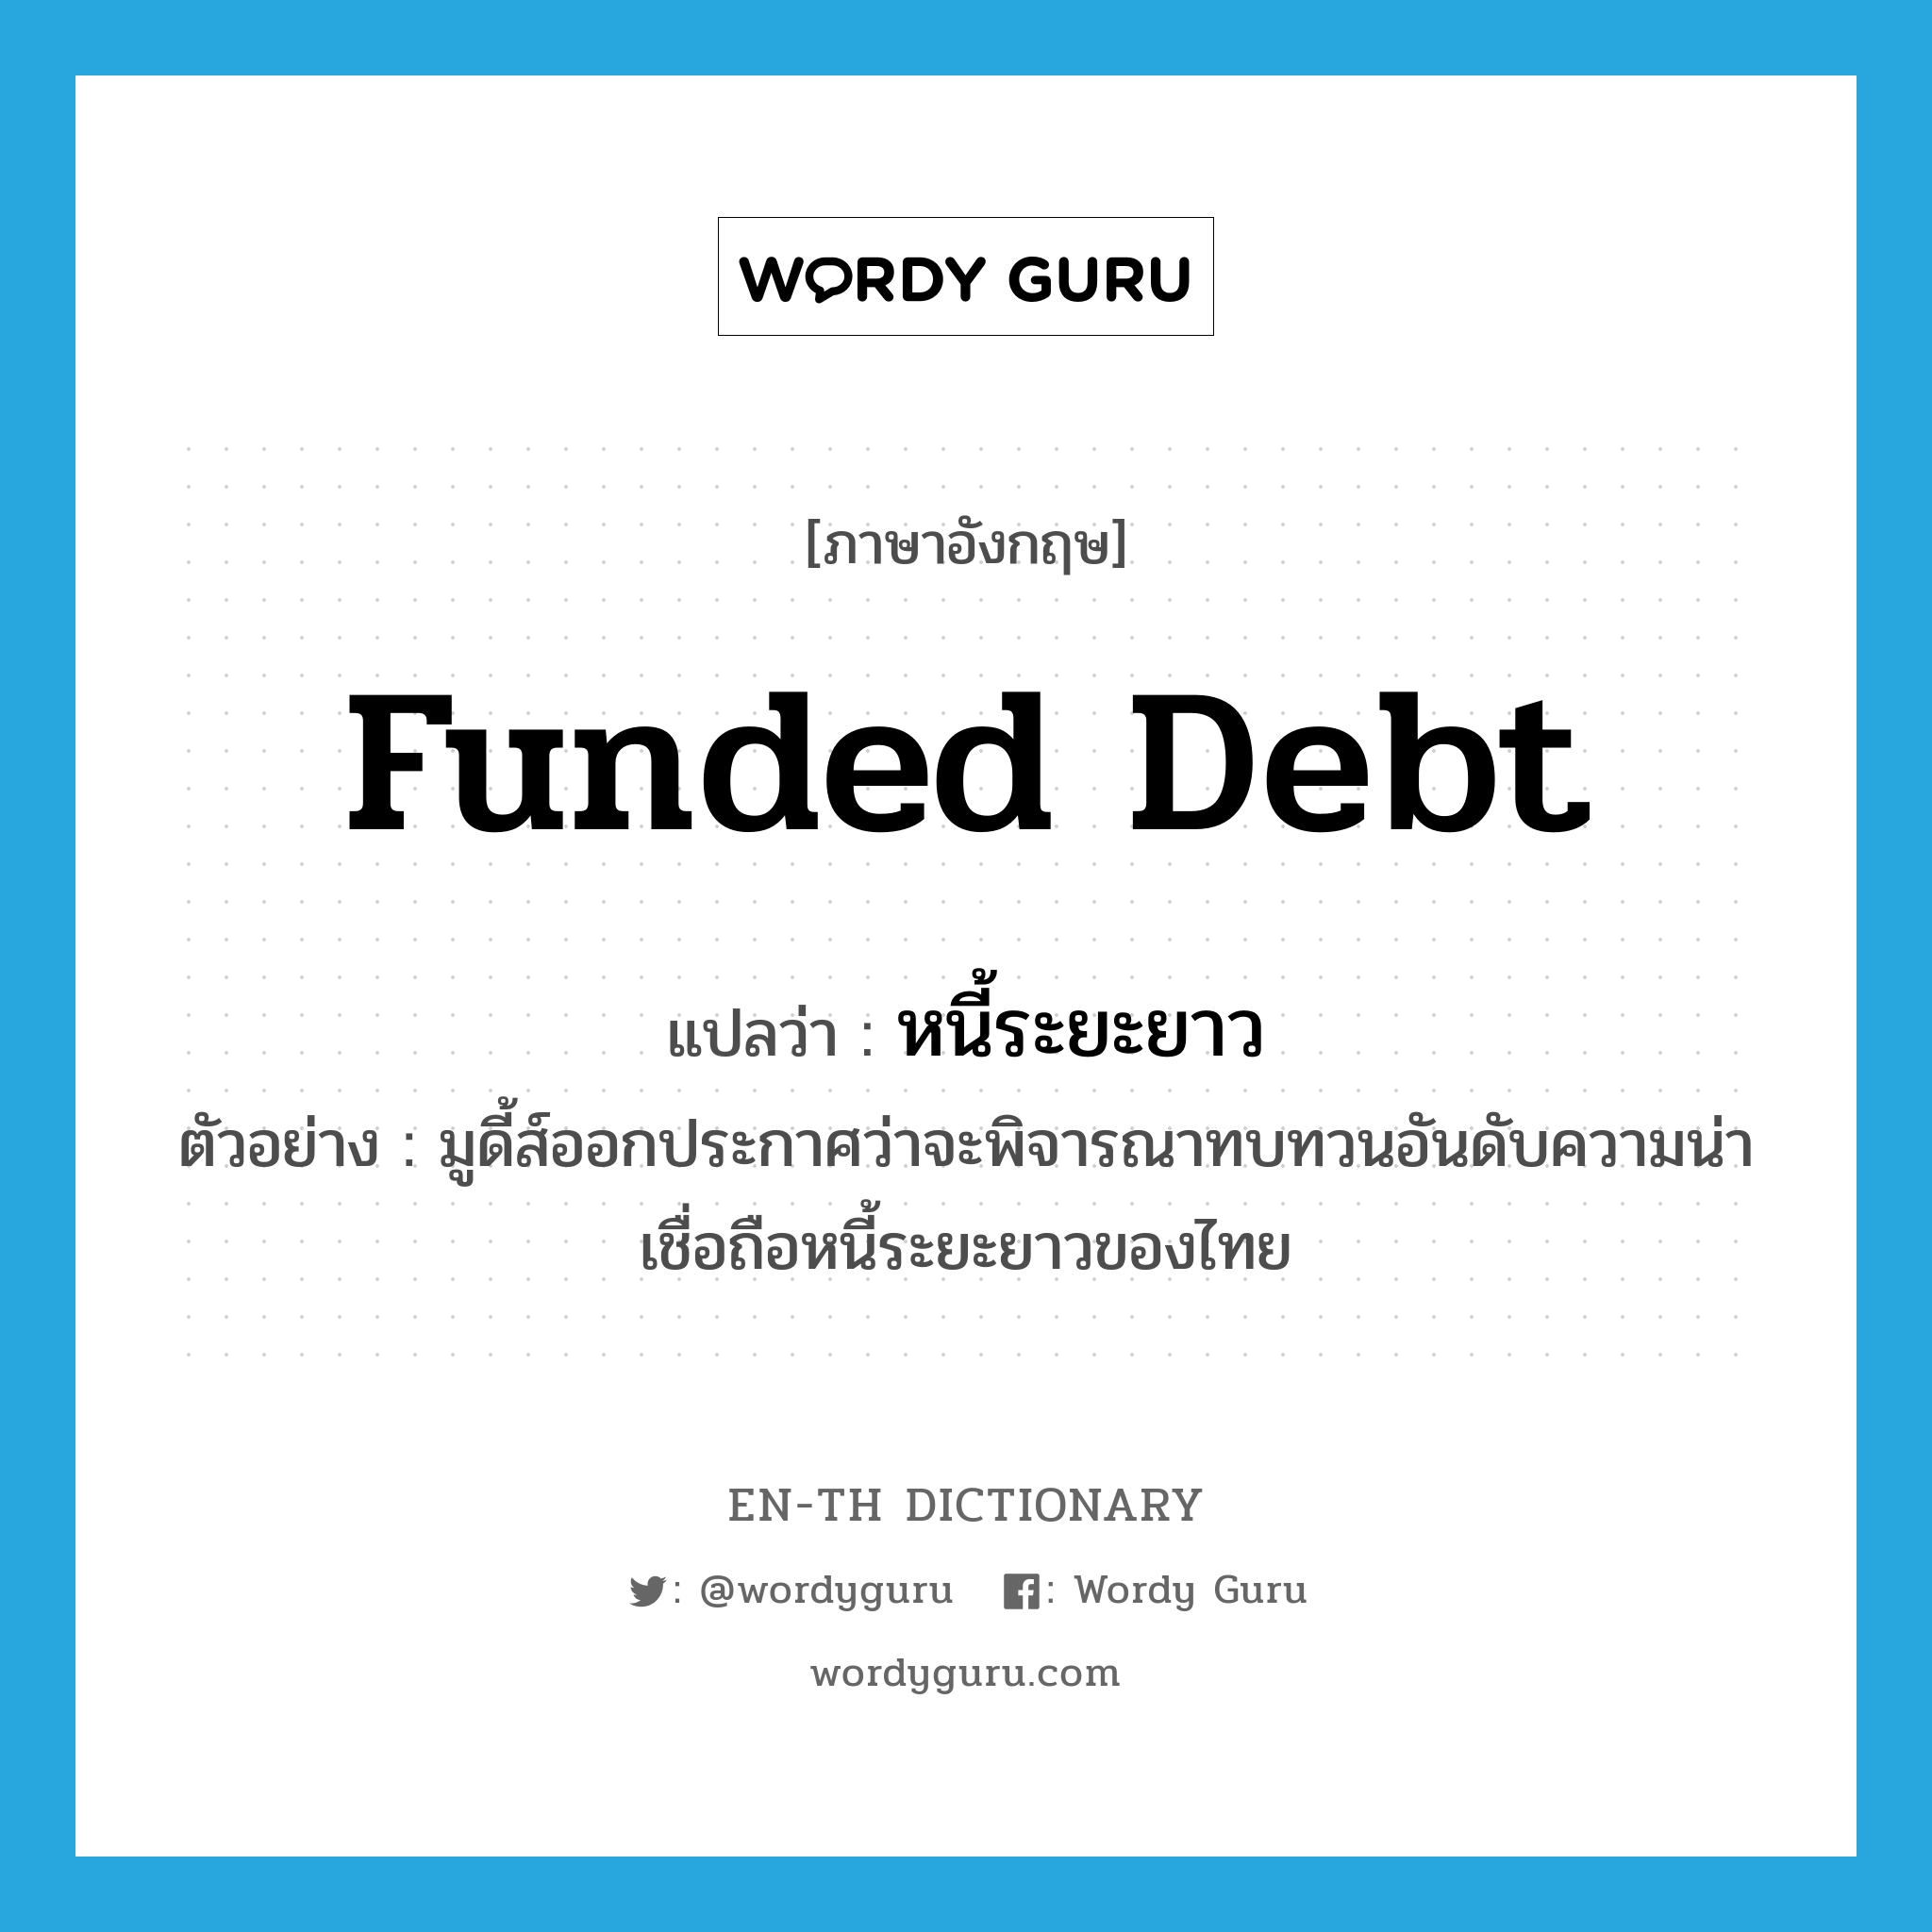 funded debt แปลว่า?, คำศัพท์ภาษาอังกฤษ funded debt แปลว่า หนี้ระยะยาว ประเภท N ตัวอย่าง มูดี้ส์ออกประกาศว่าจะพิจารณาทบทวนอันดับความน่าเชื่อถือหนี้ระยะยาวของไทย หมวด N